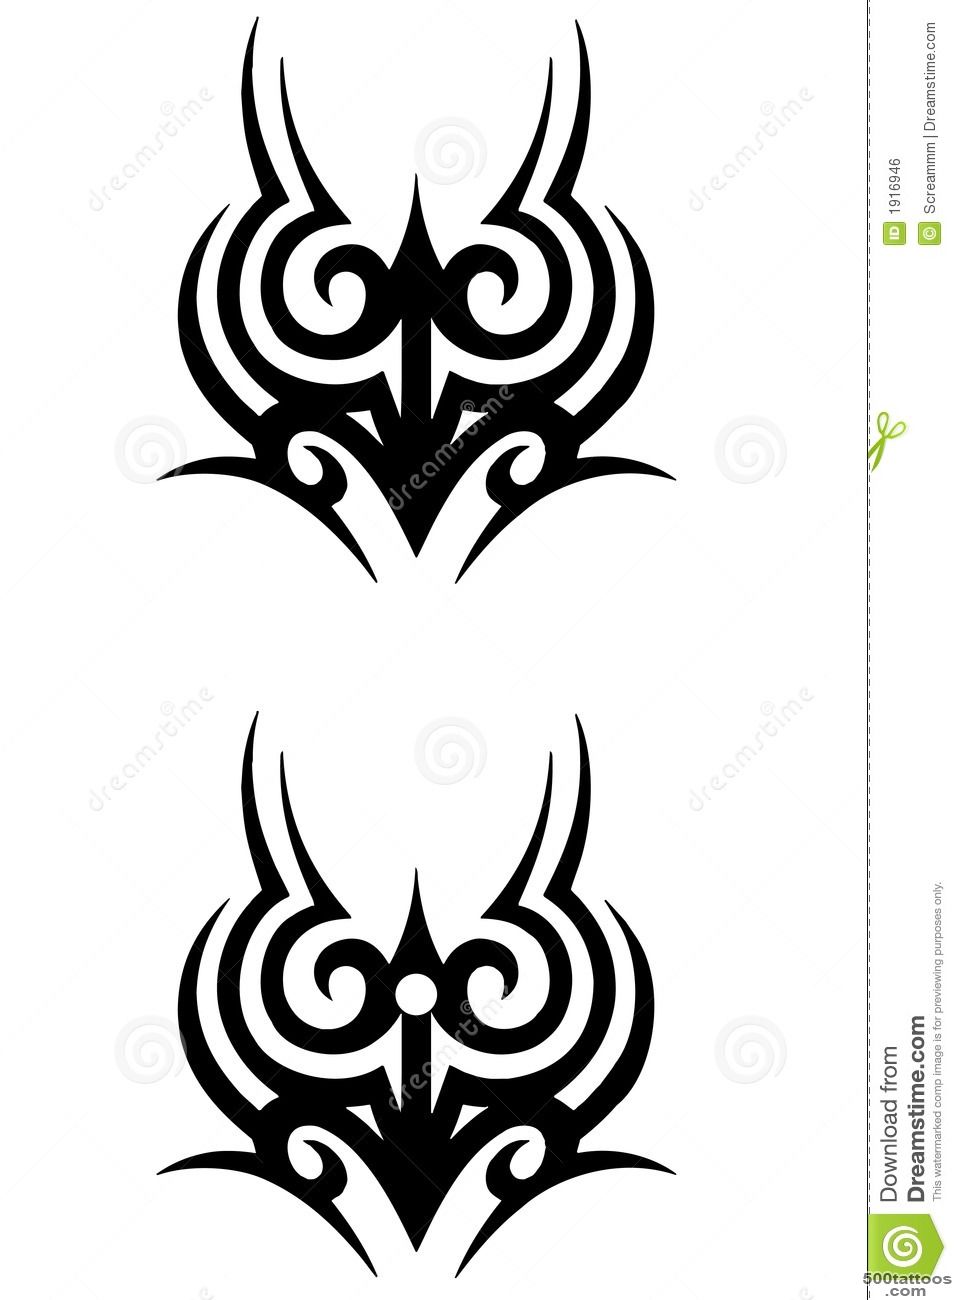 Decorative Tattoo Design Royalty Free Stock Image   Image 1916946_8